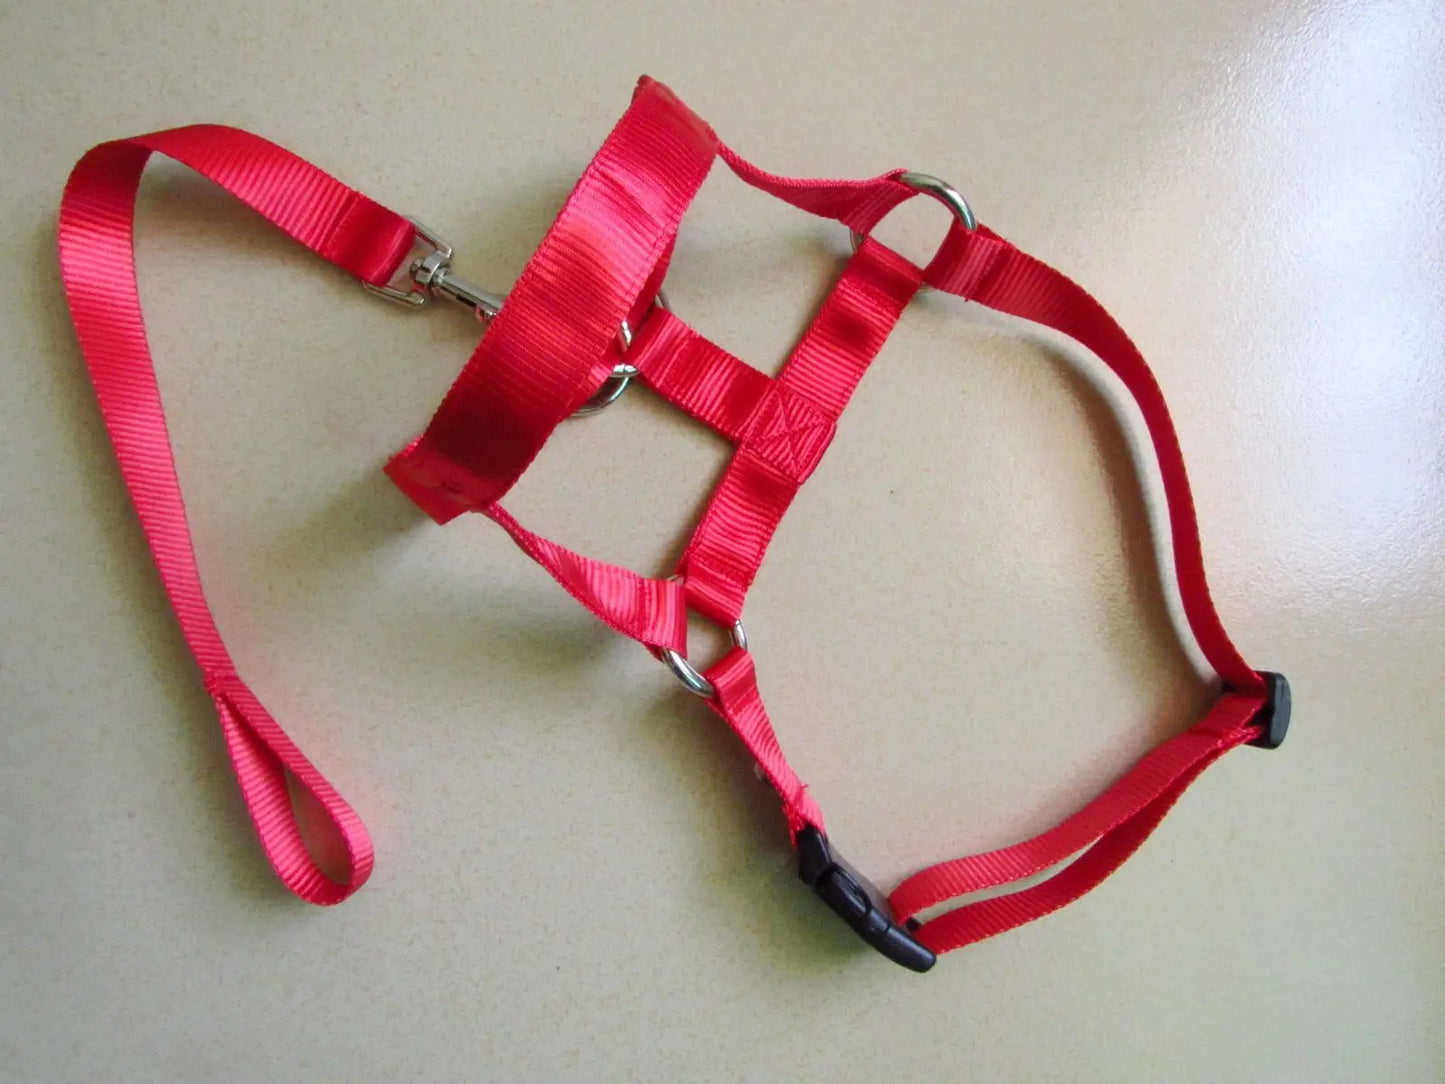 red, head harness training leash